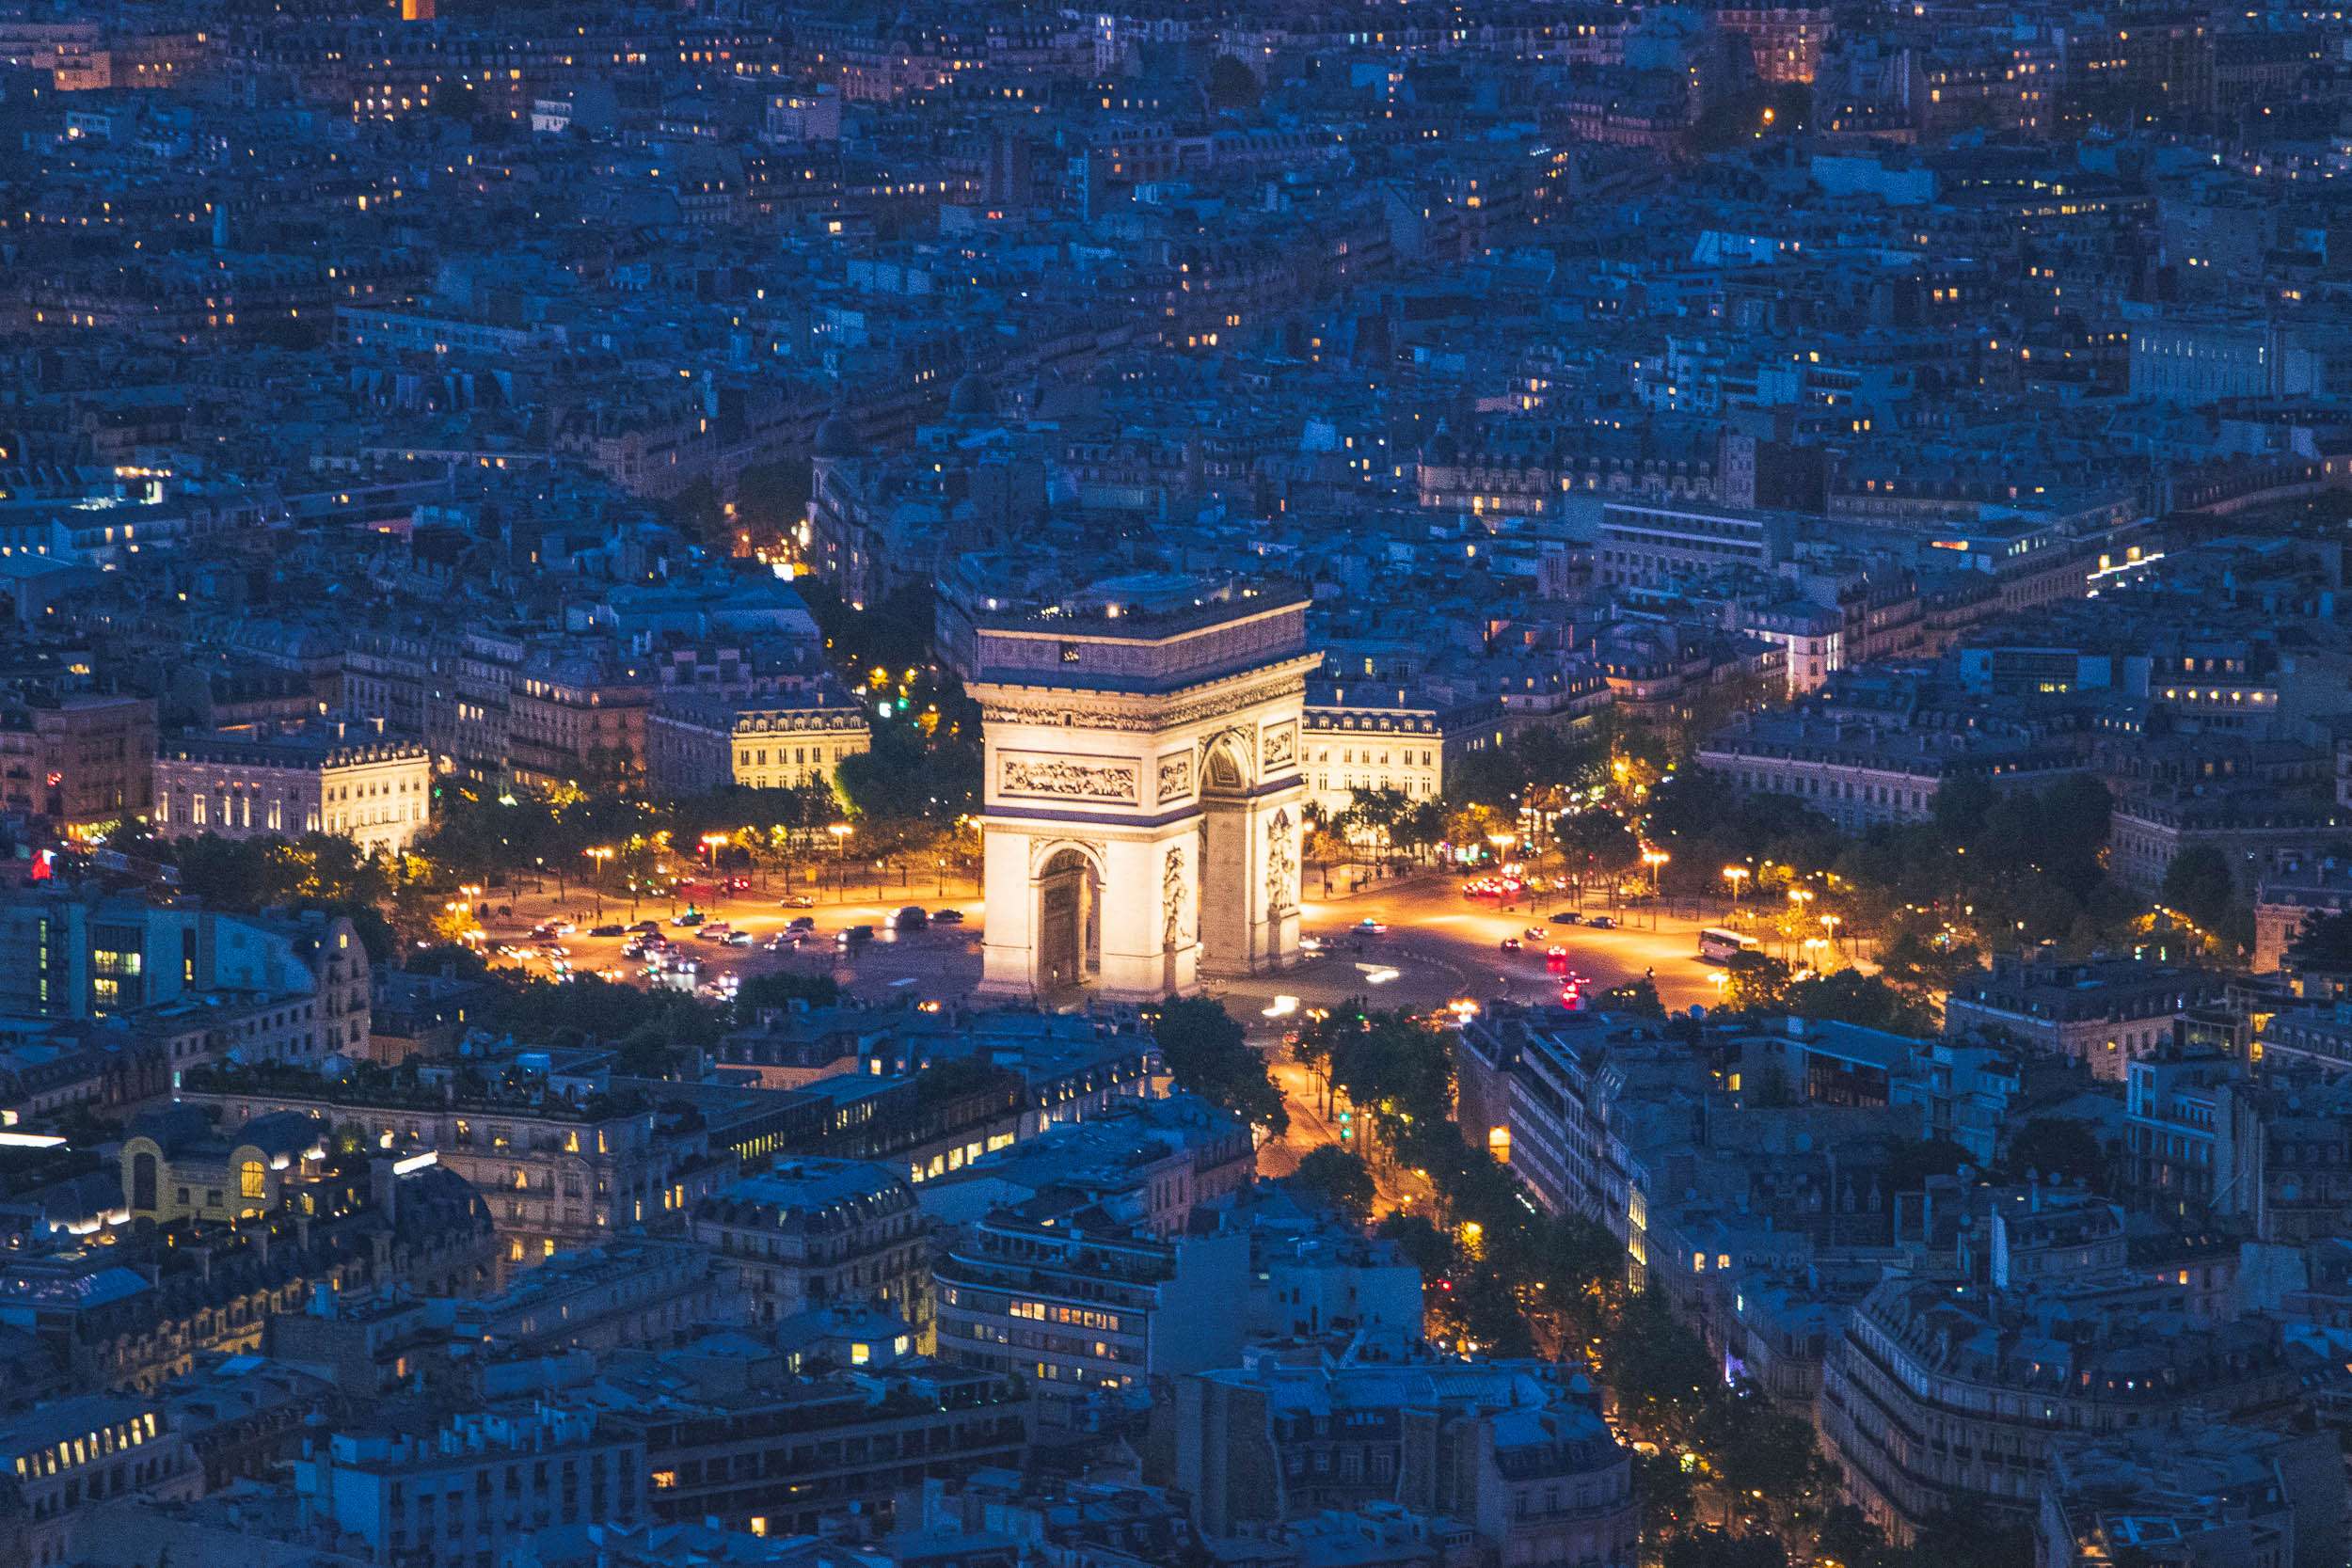 A photo of the Arc de Triomphe